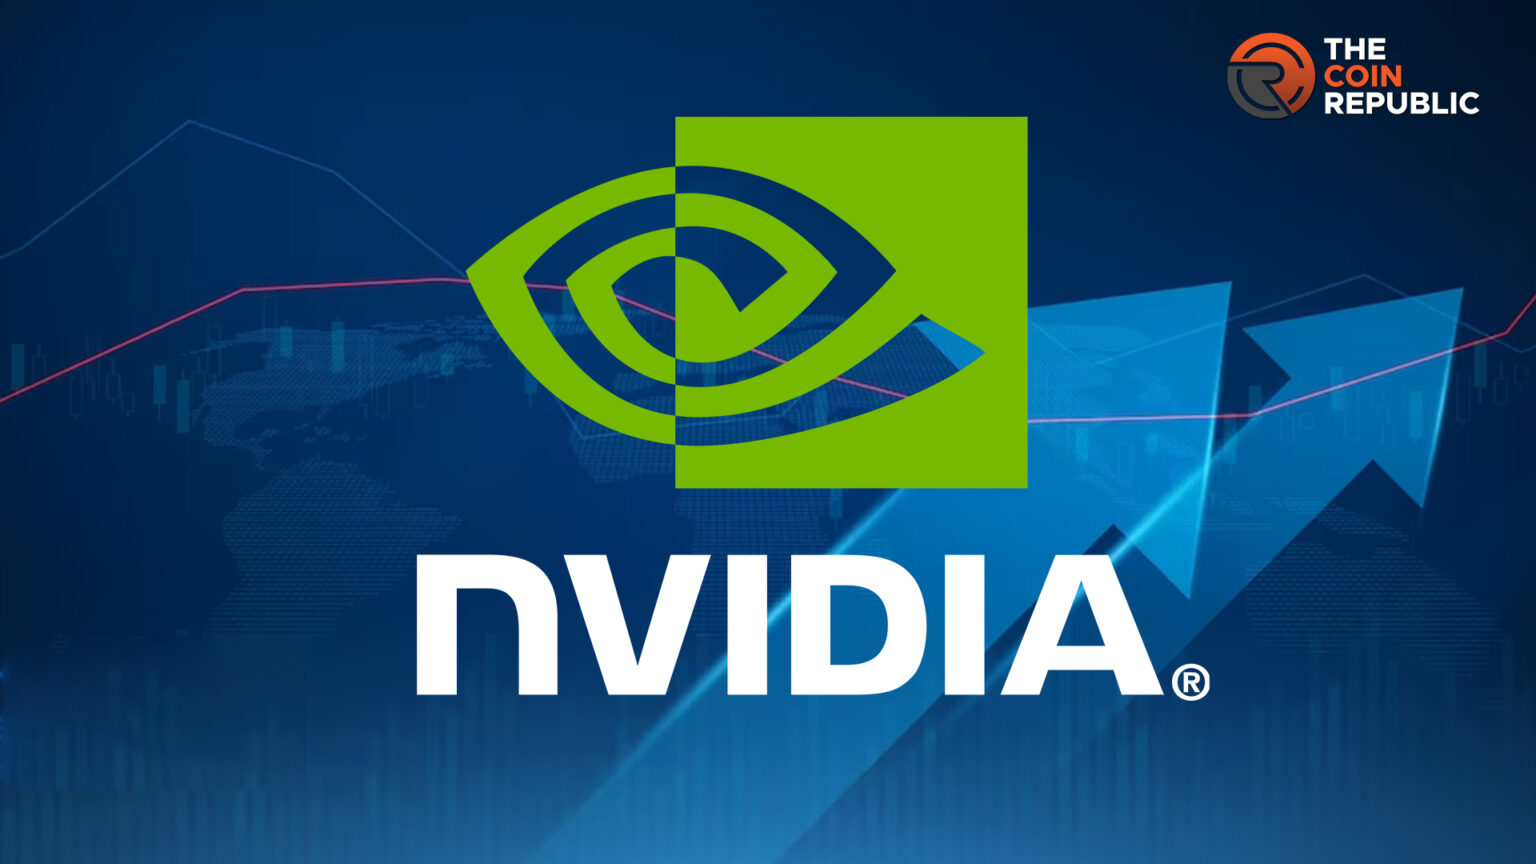 NVDA Stock Nvidia Makes Headlines After 265 Earnings Growth